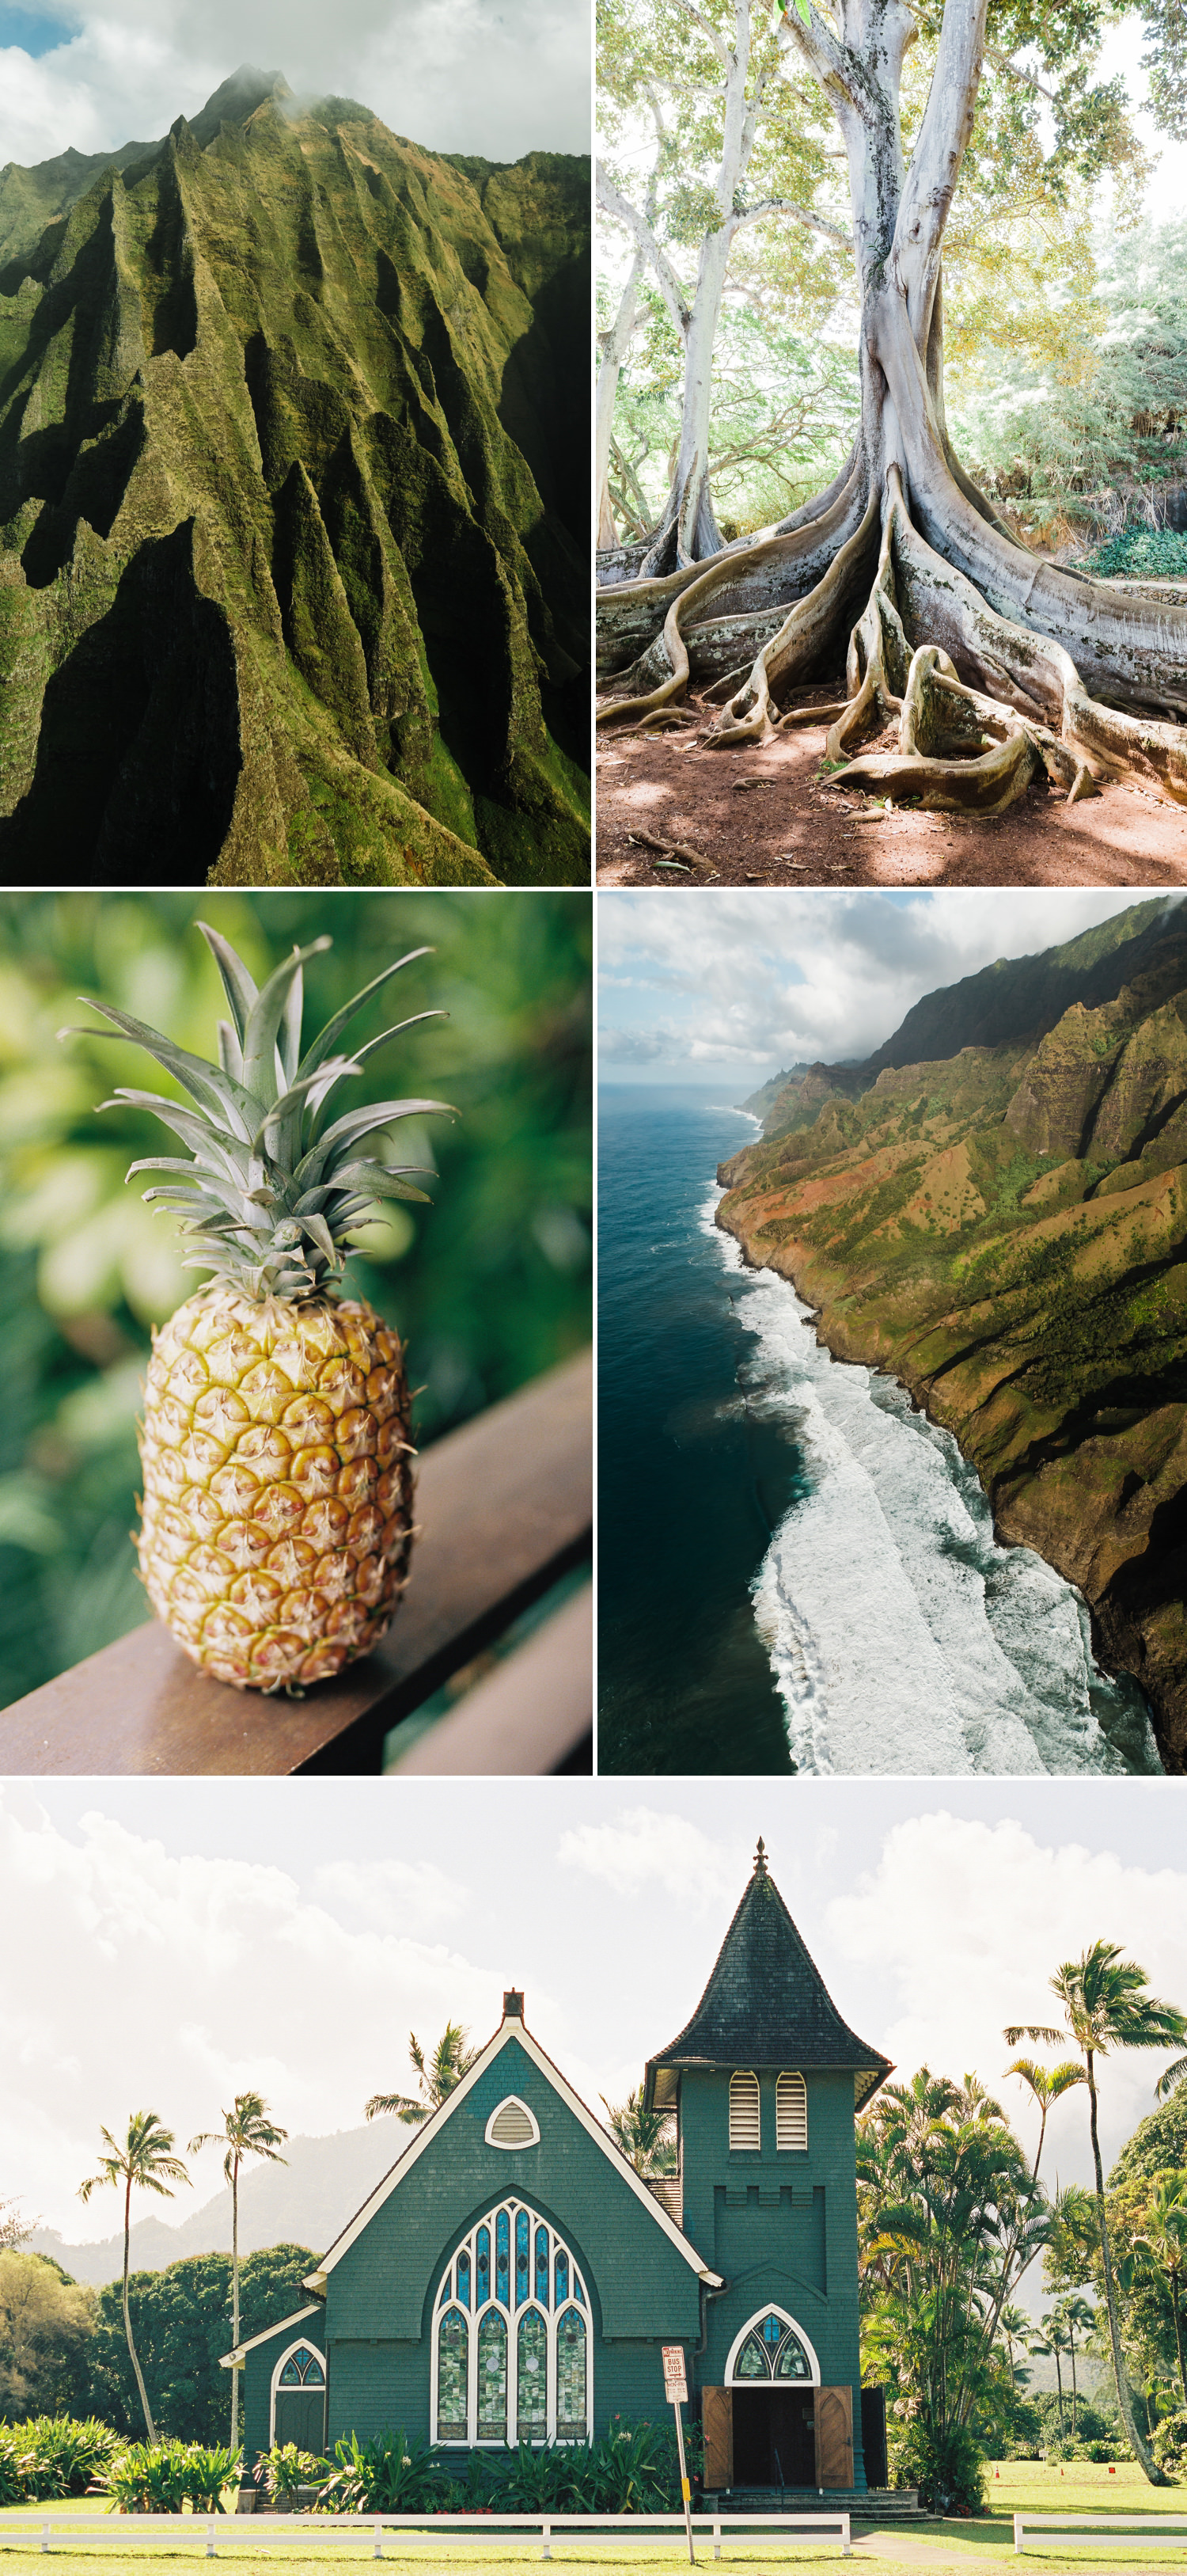 cameron-zegers-photography-travel-hawaii-kauai-5.jpg